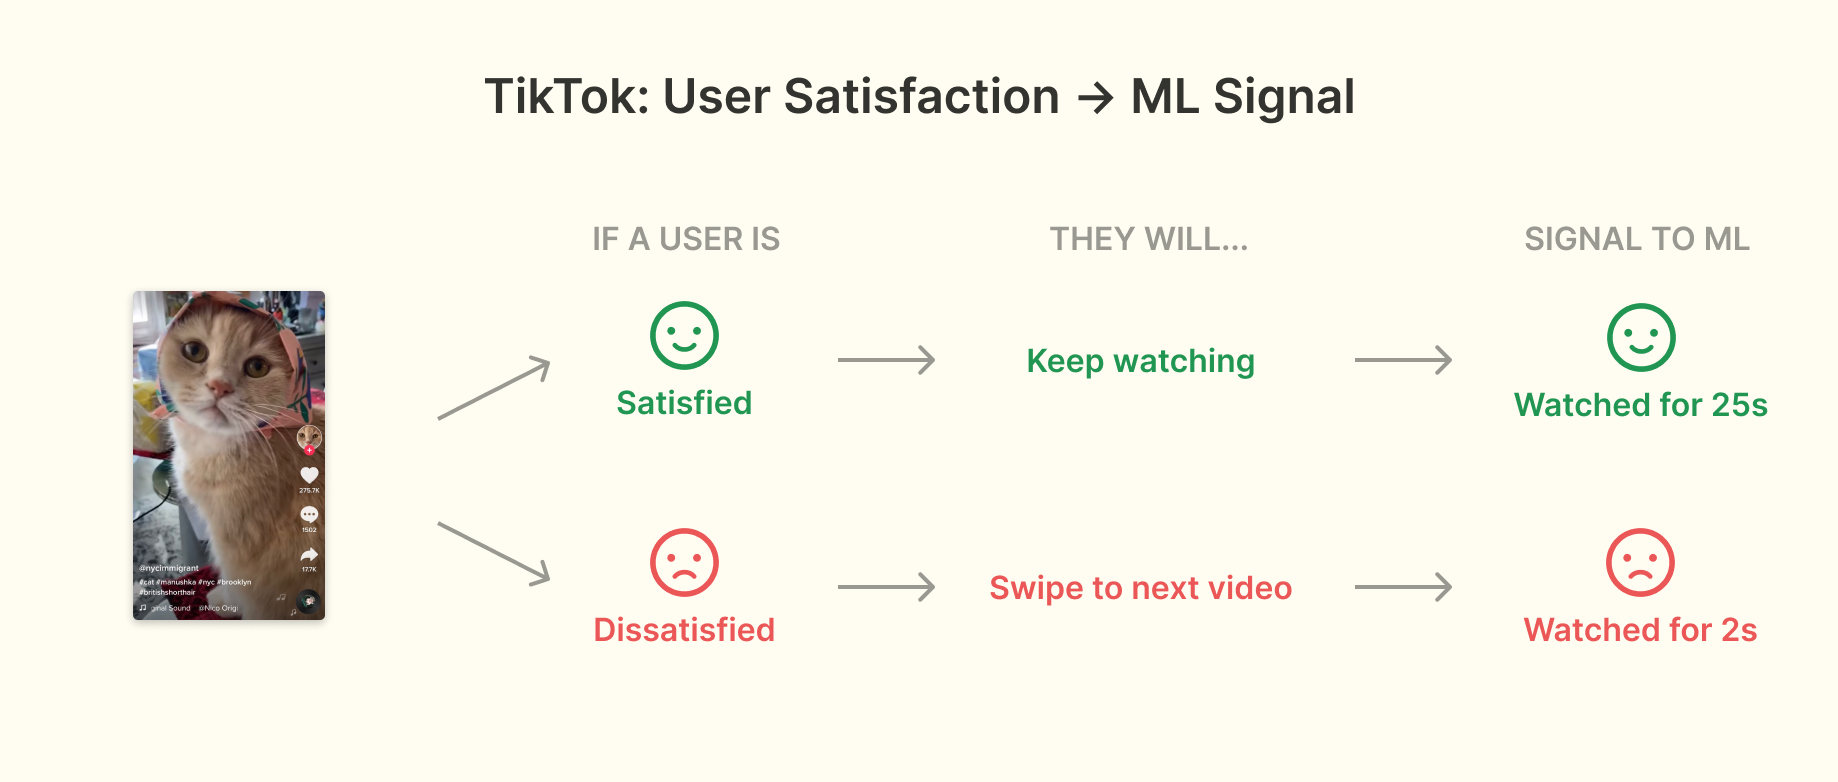 TikTok: User Satisfaction -> ML Signal